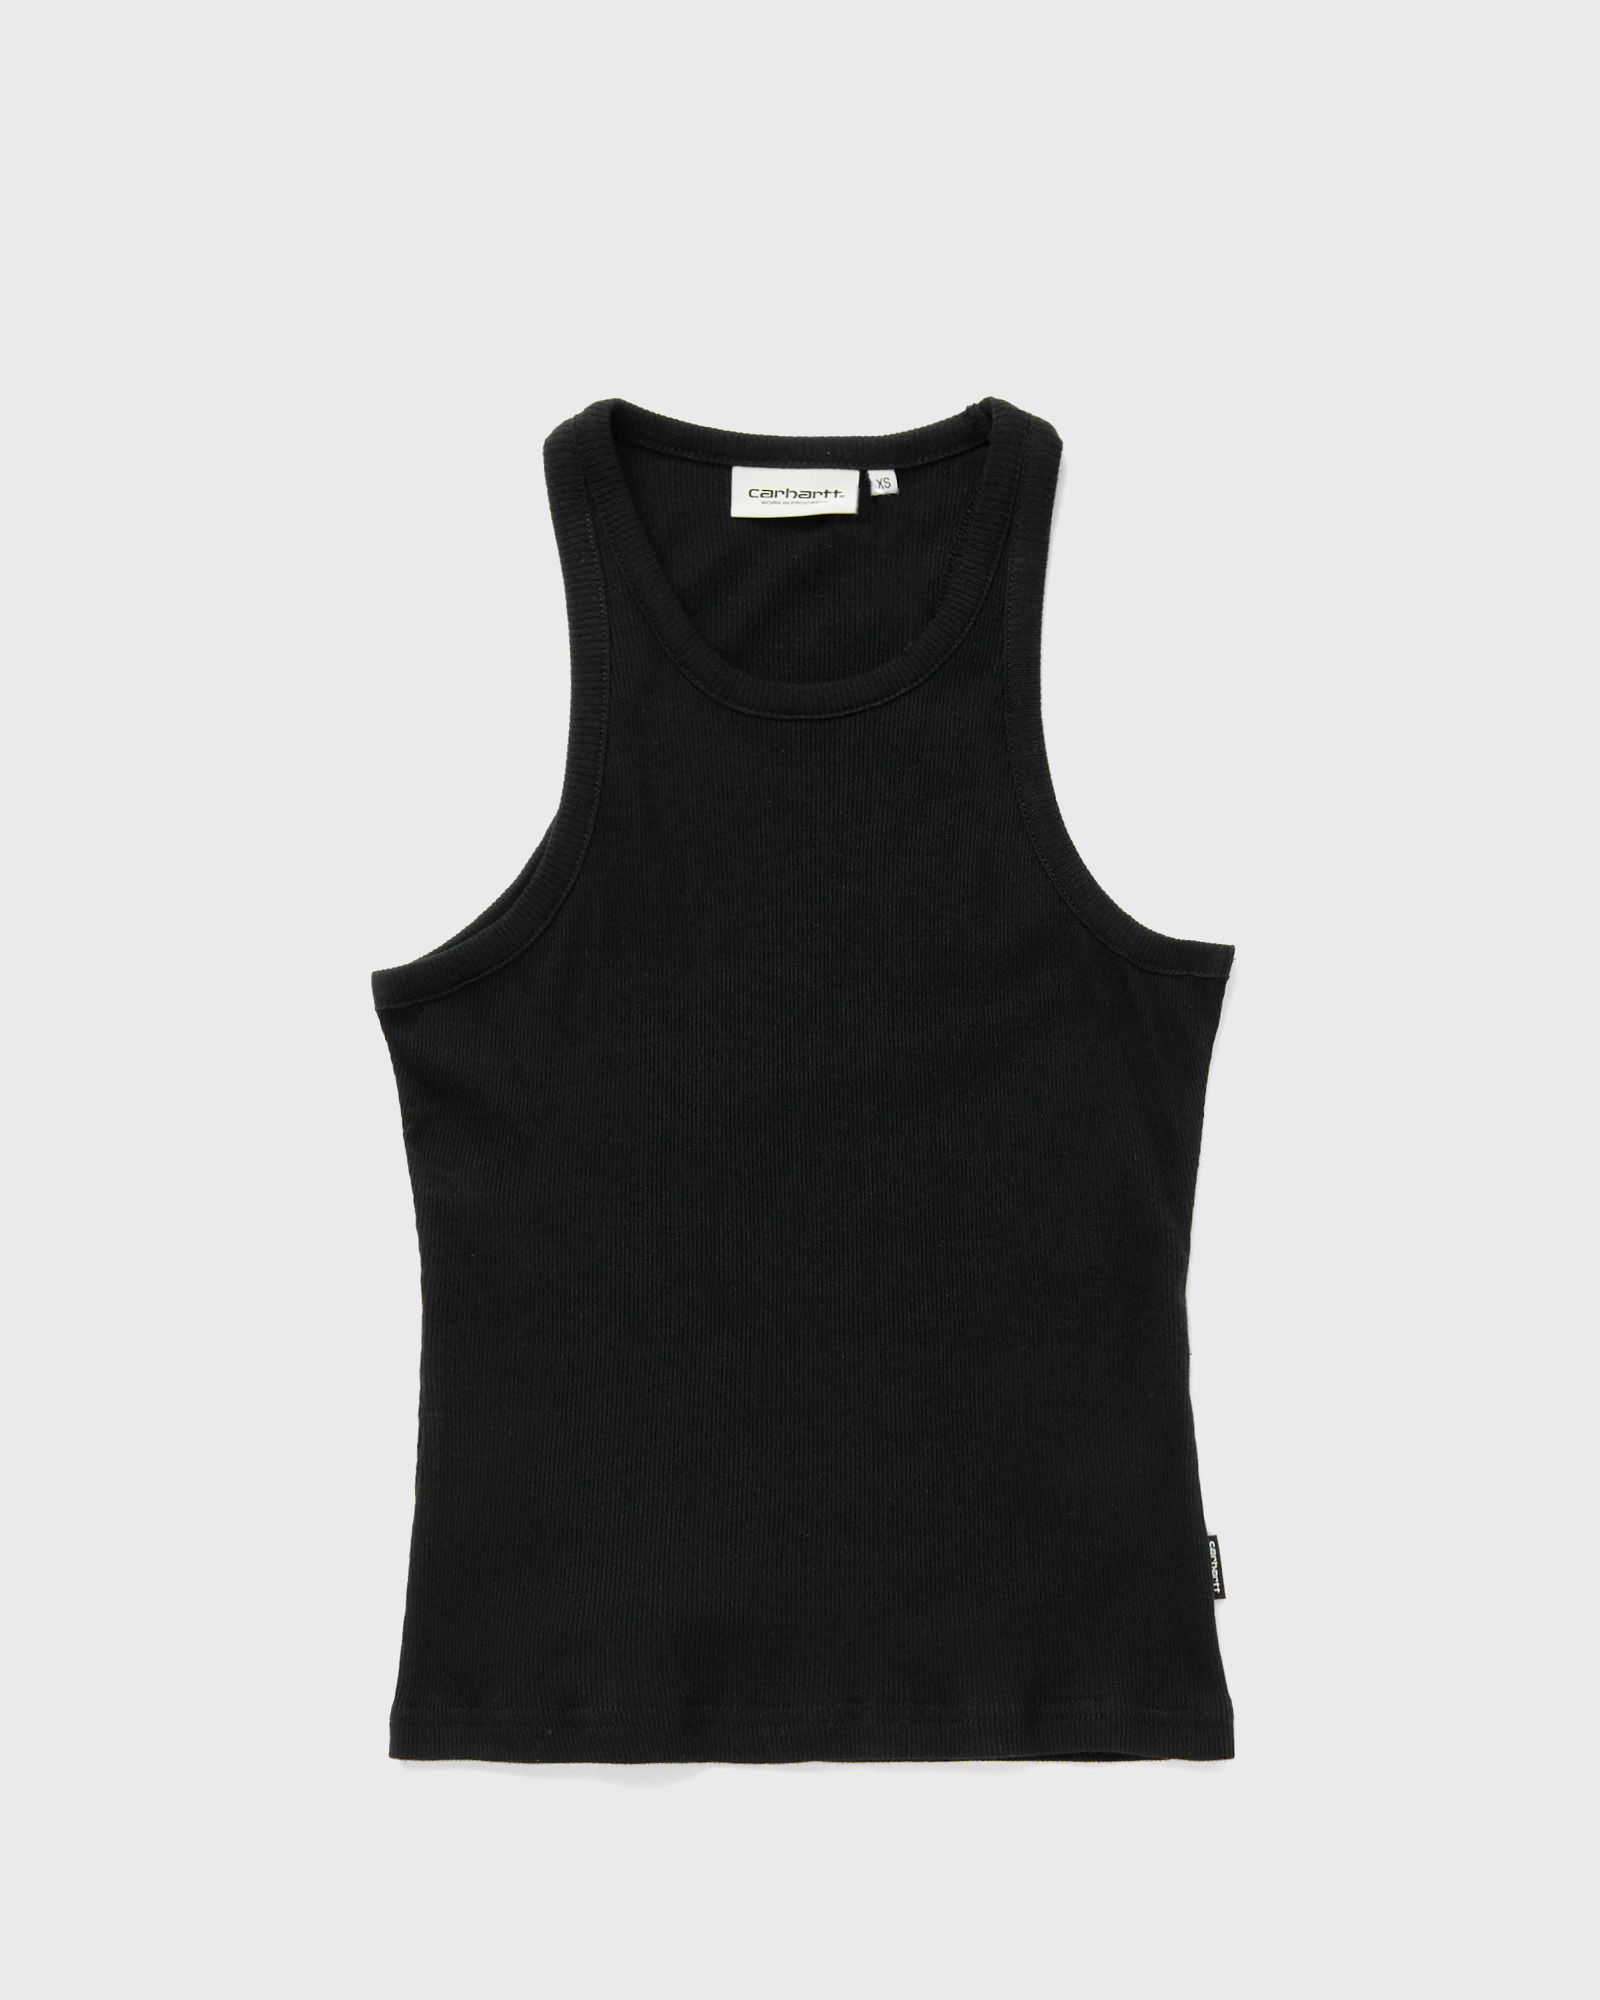 Carhartt WIP WMNS Porter A-Shirt women Tops & Tanks black in Größe:L von Carhartt WIP